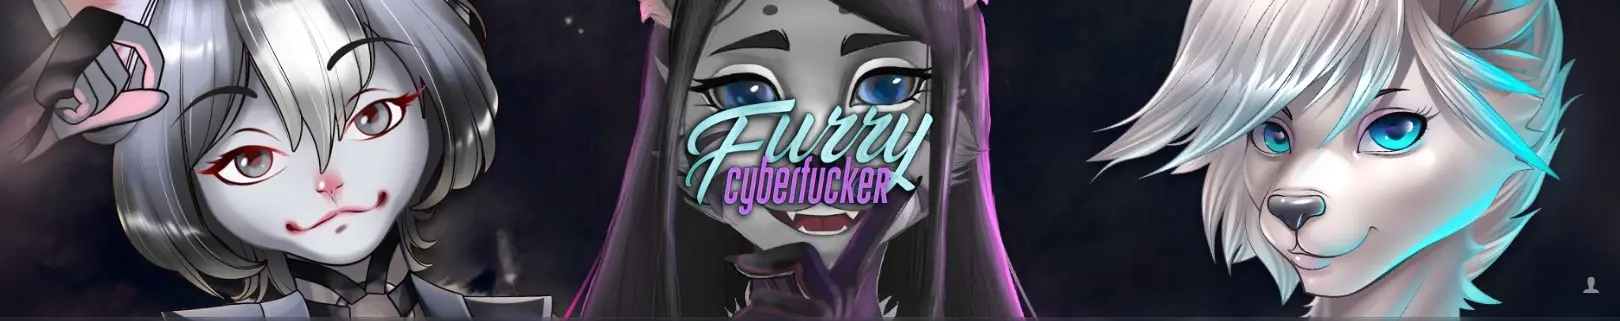 Furry Cyberfucker main image